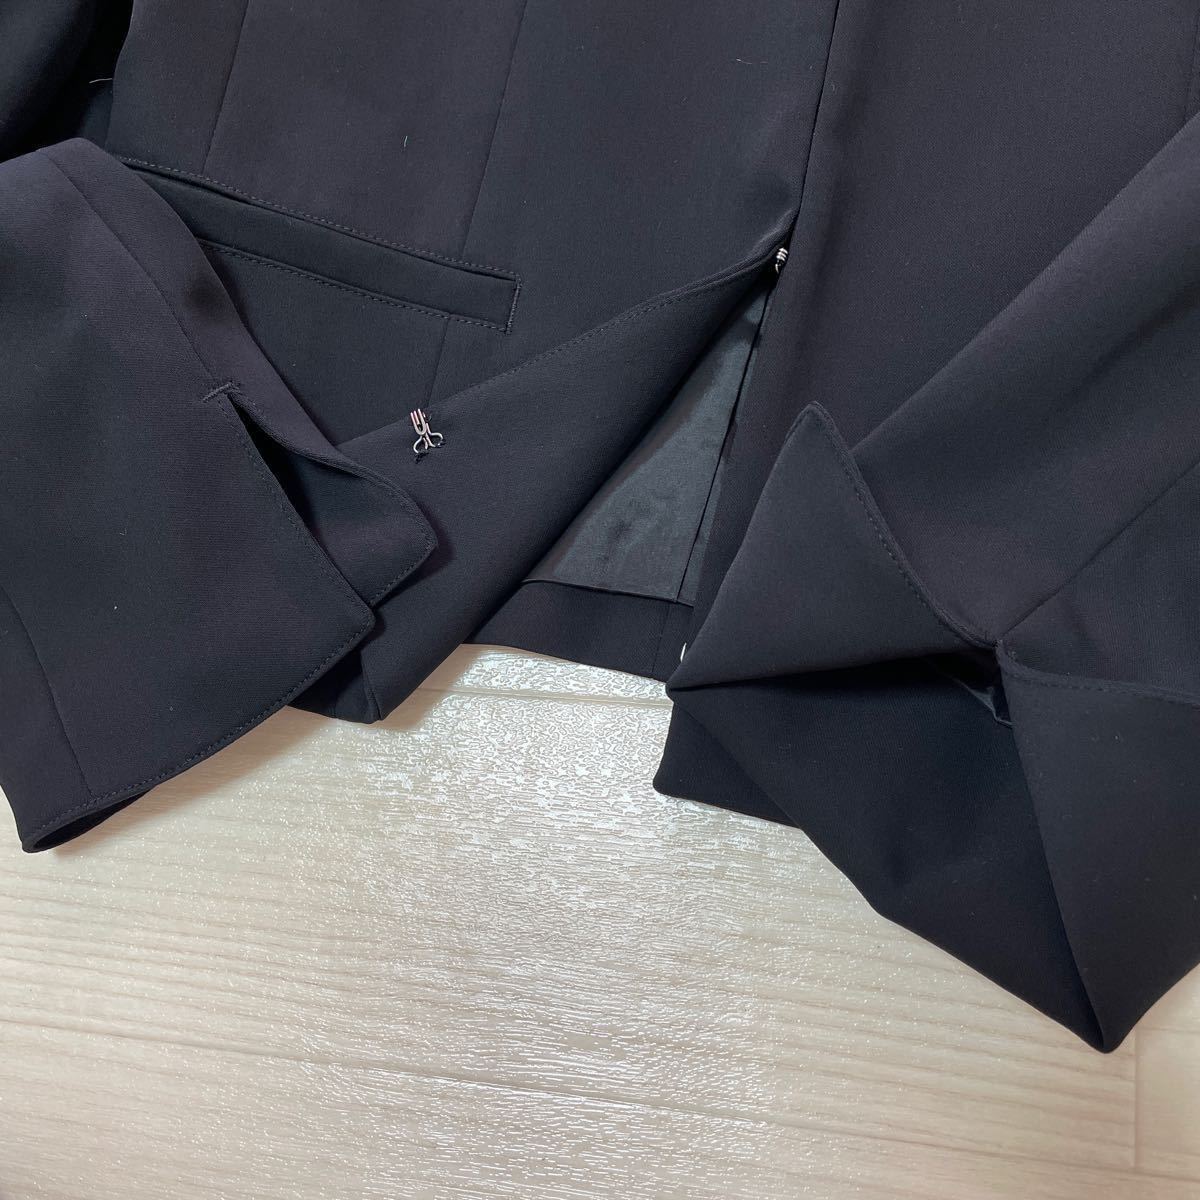 PLST plus te lady's formal One-piece suit no color jacket graduation ceremony go in . type type . black black size M beautiful goods 